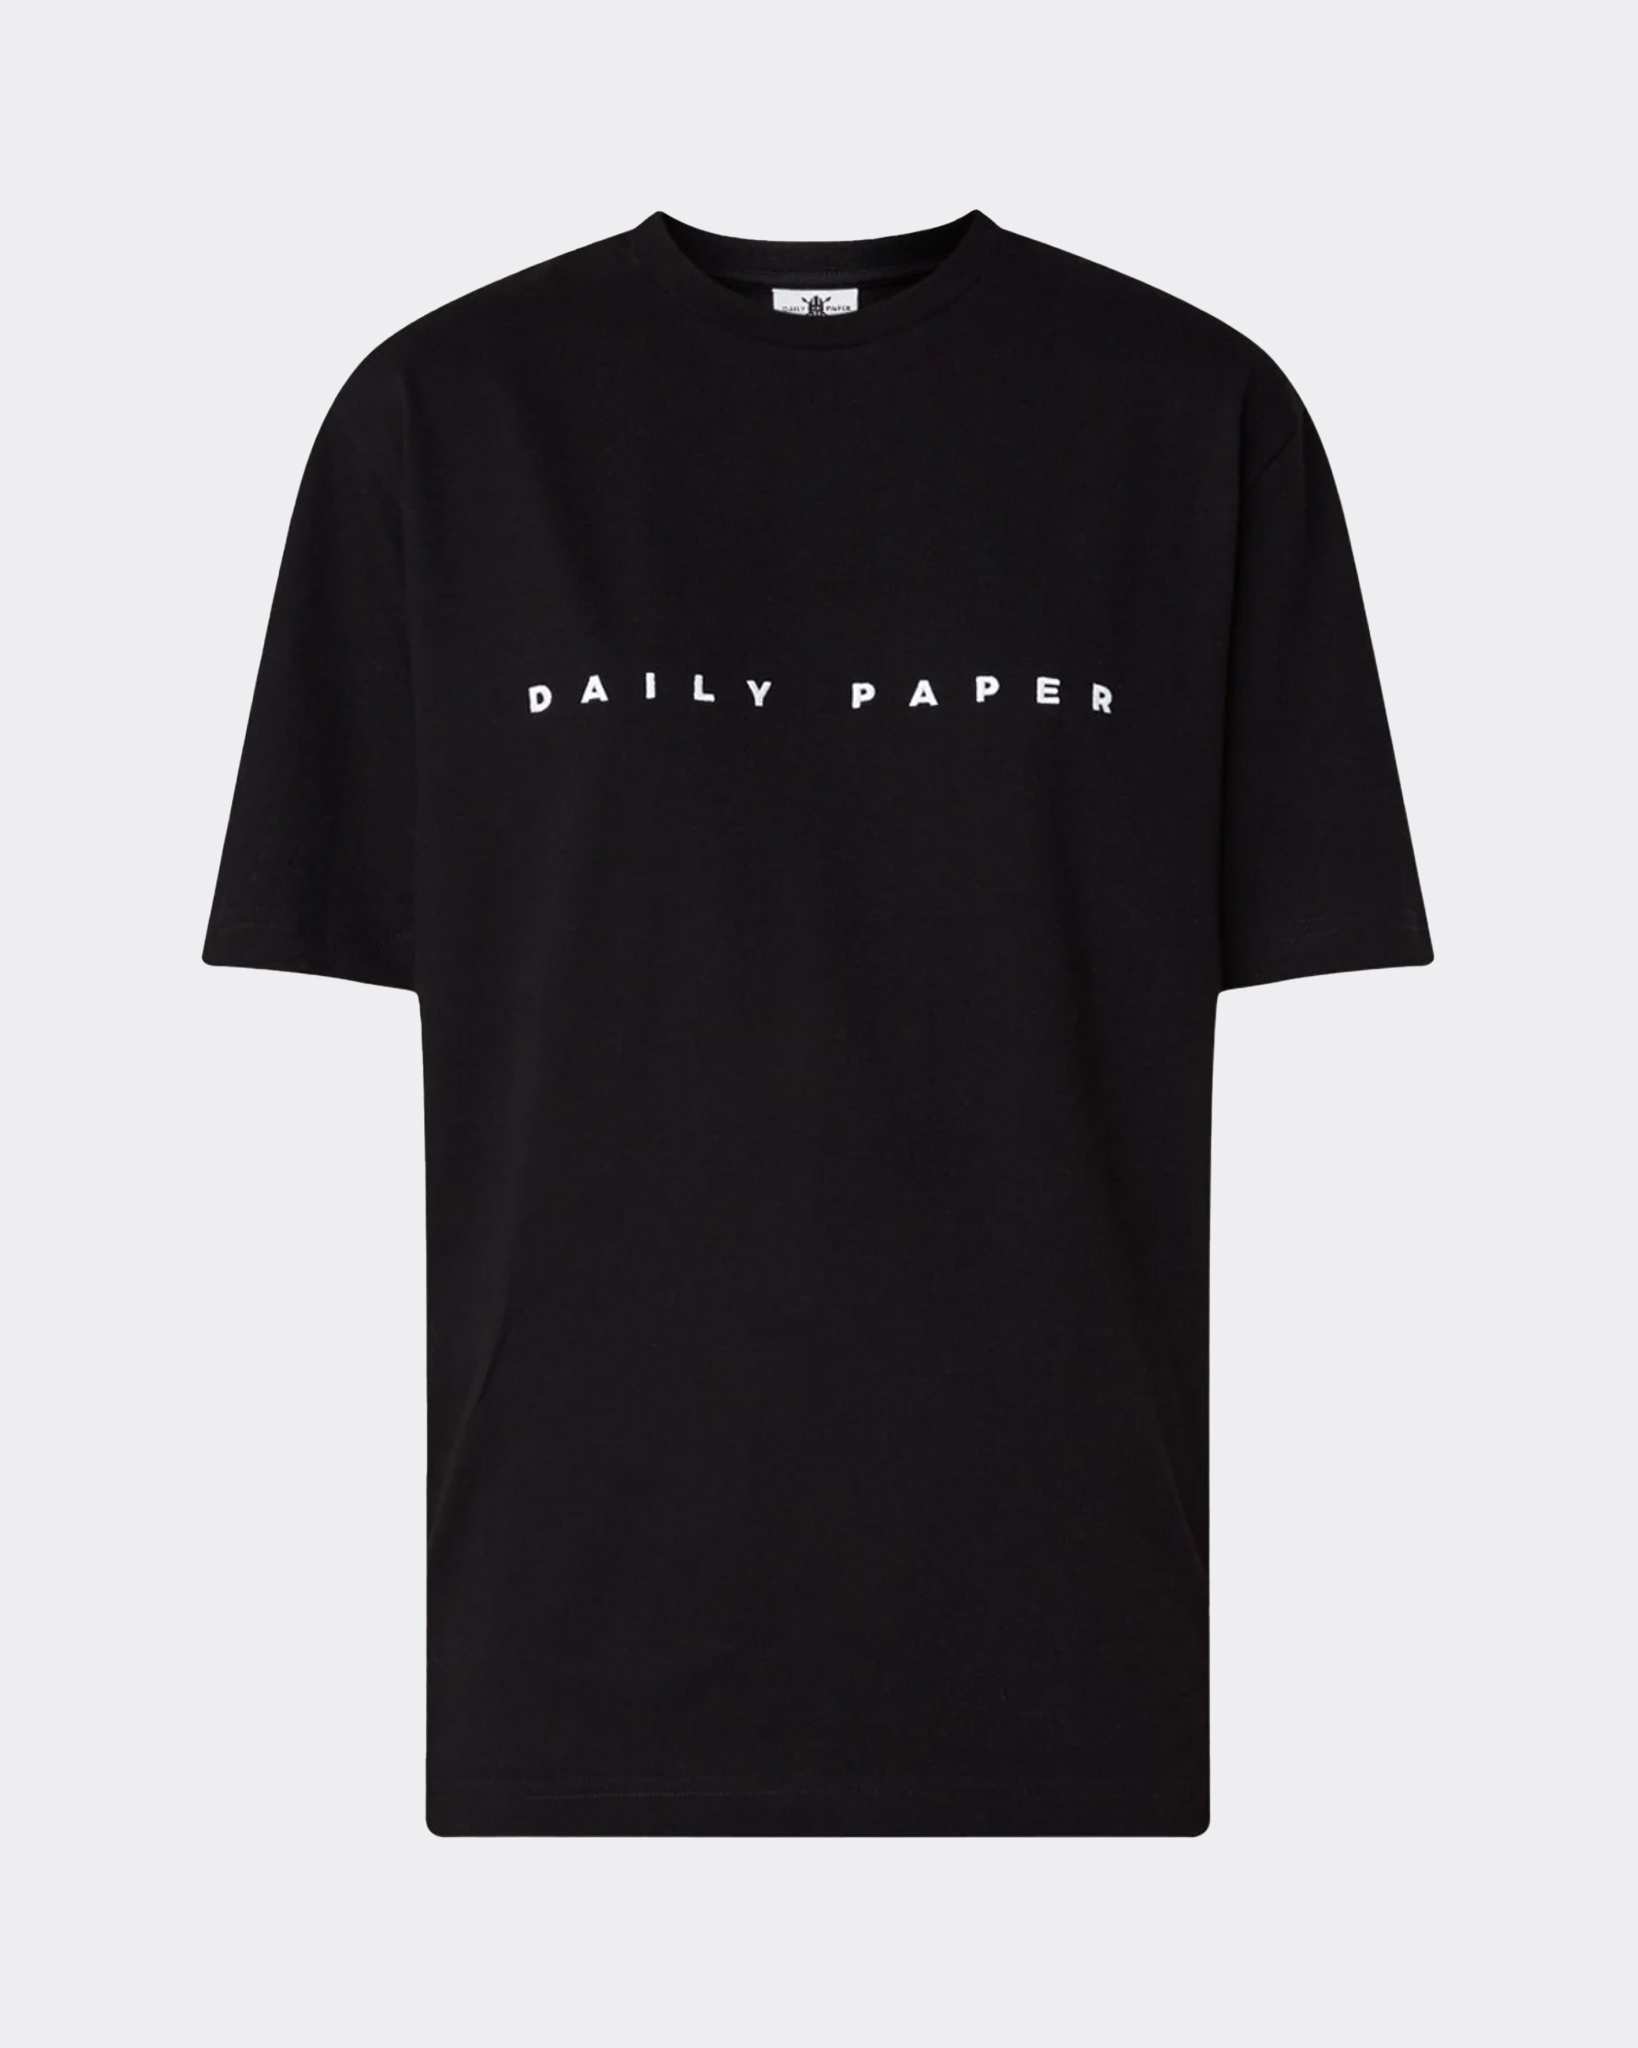 Daily Paper T-Shirt Black - Beachim